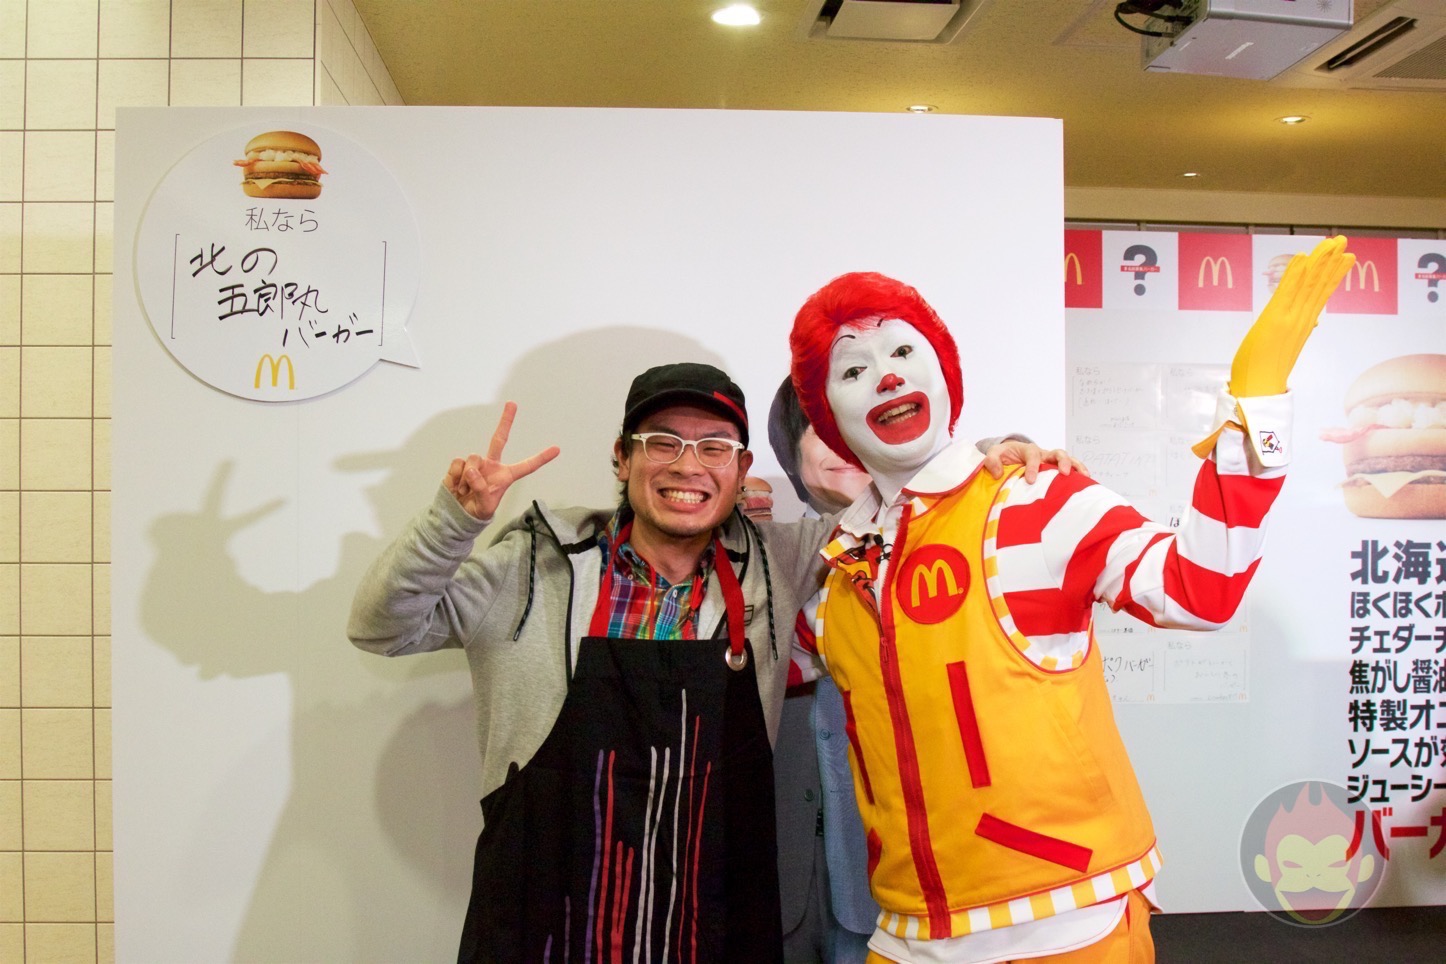 McDonalds-New-Burger-With-No-Name-14.jpg